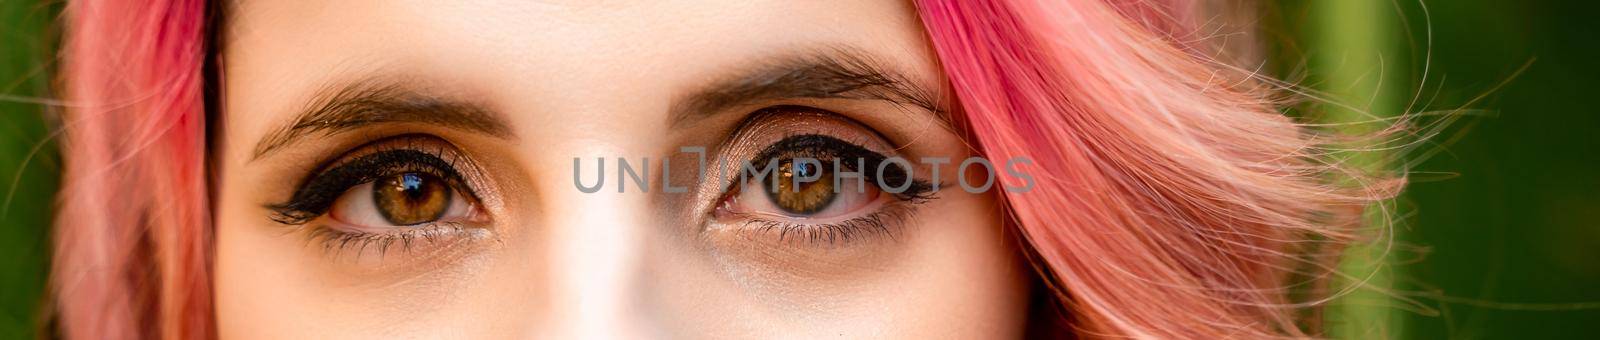 Macro shot of woman's eye with transparent makeup. Expressive look. sight